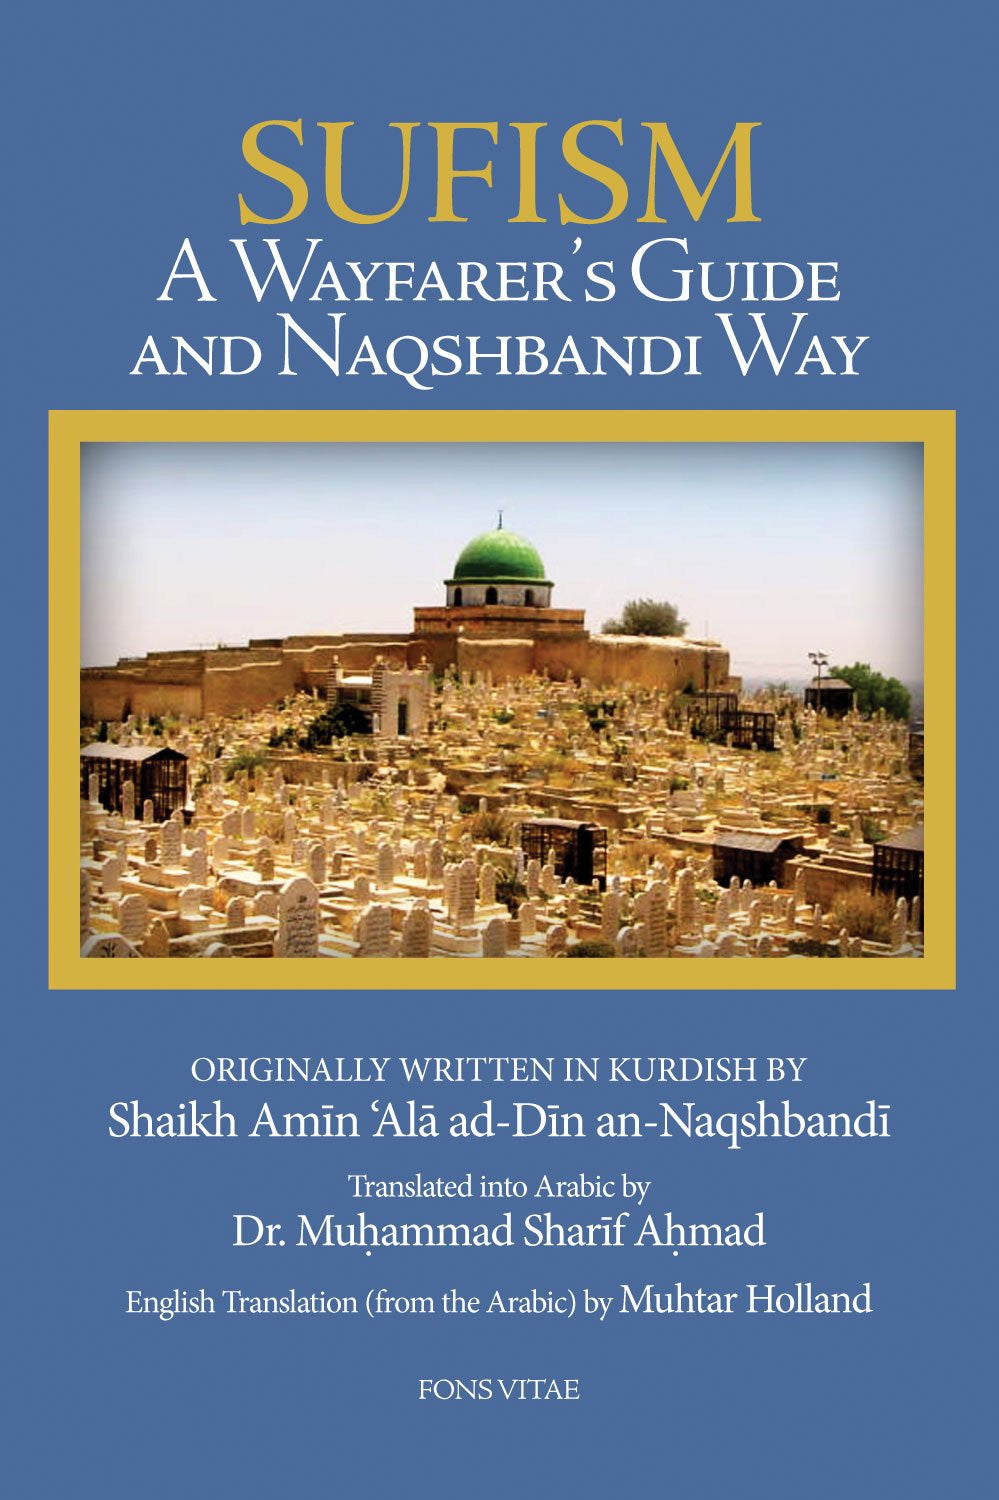 Sufism: A Wayfarer's Guide and Naqshbandi Way , Book - Daybreak International Bookstore, Daybreak Press Global Bookshop
